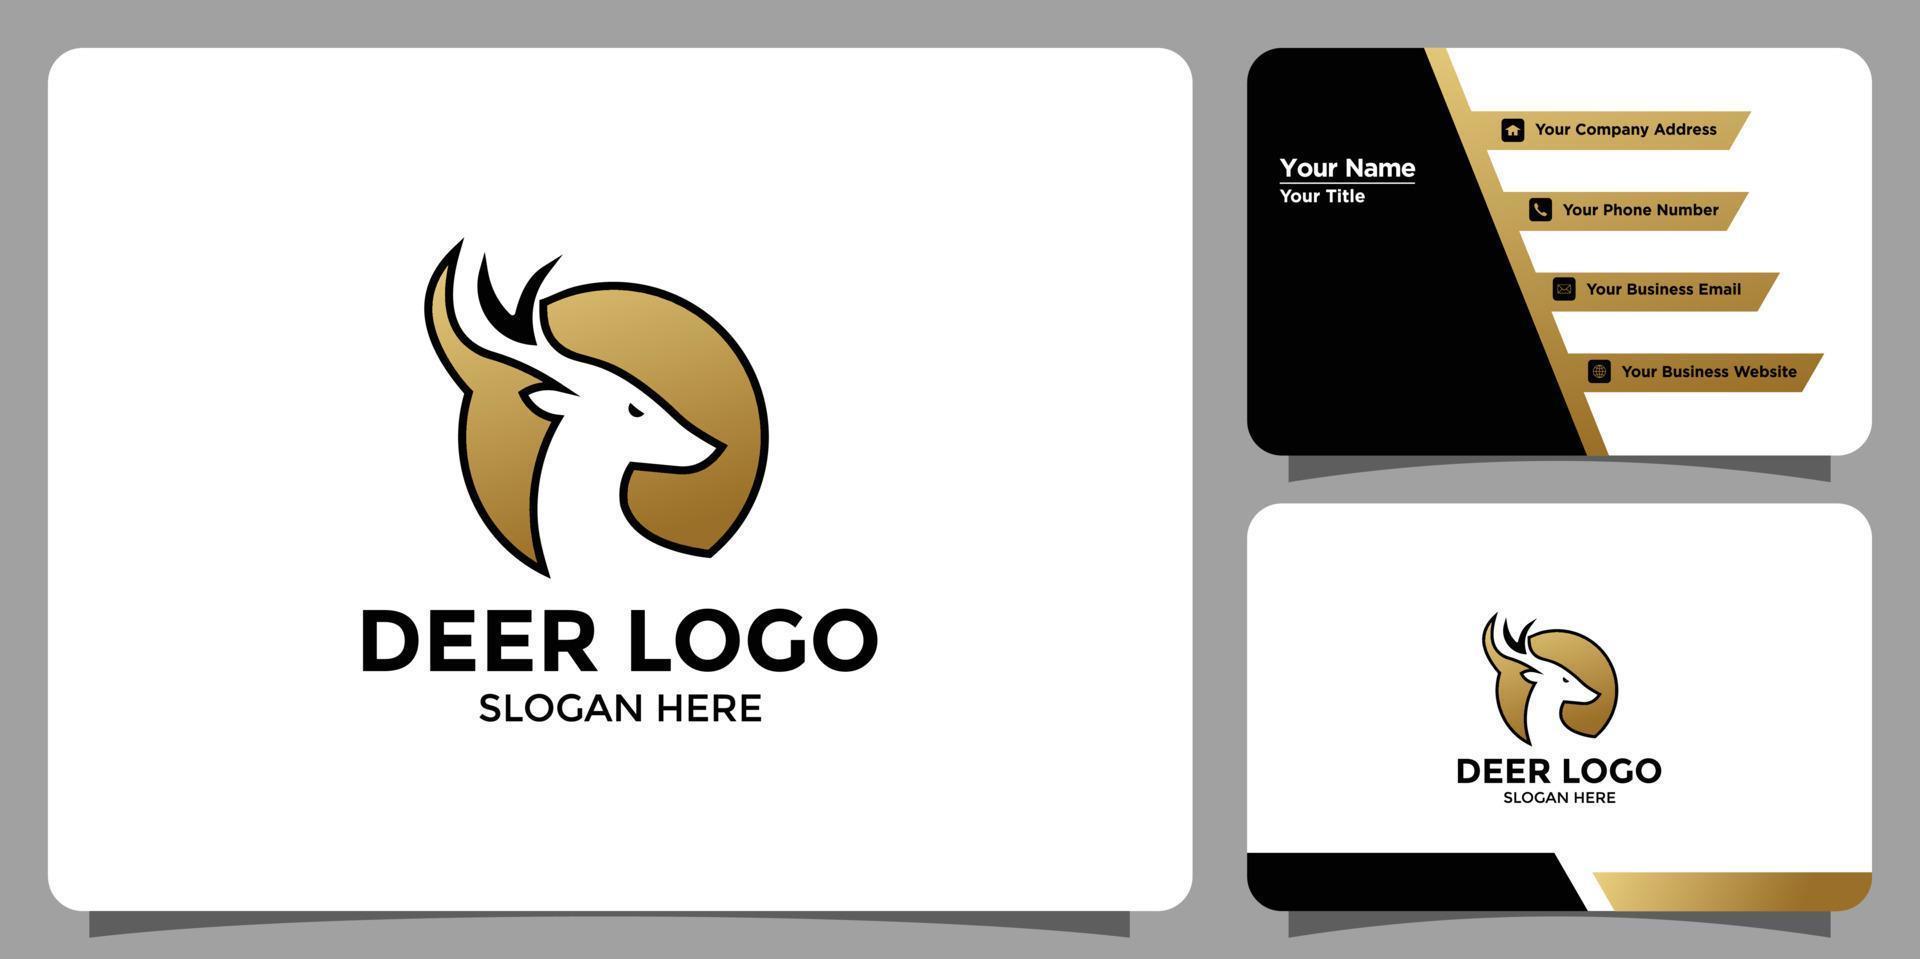 minimalist deer logo design and branding card template vector